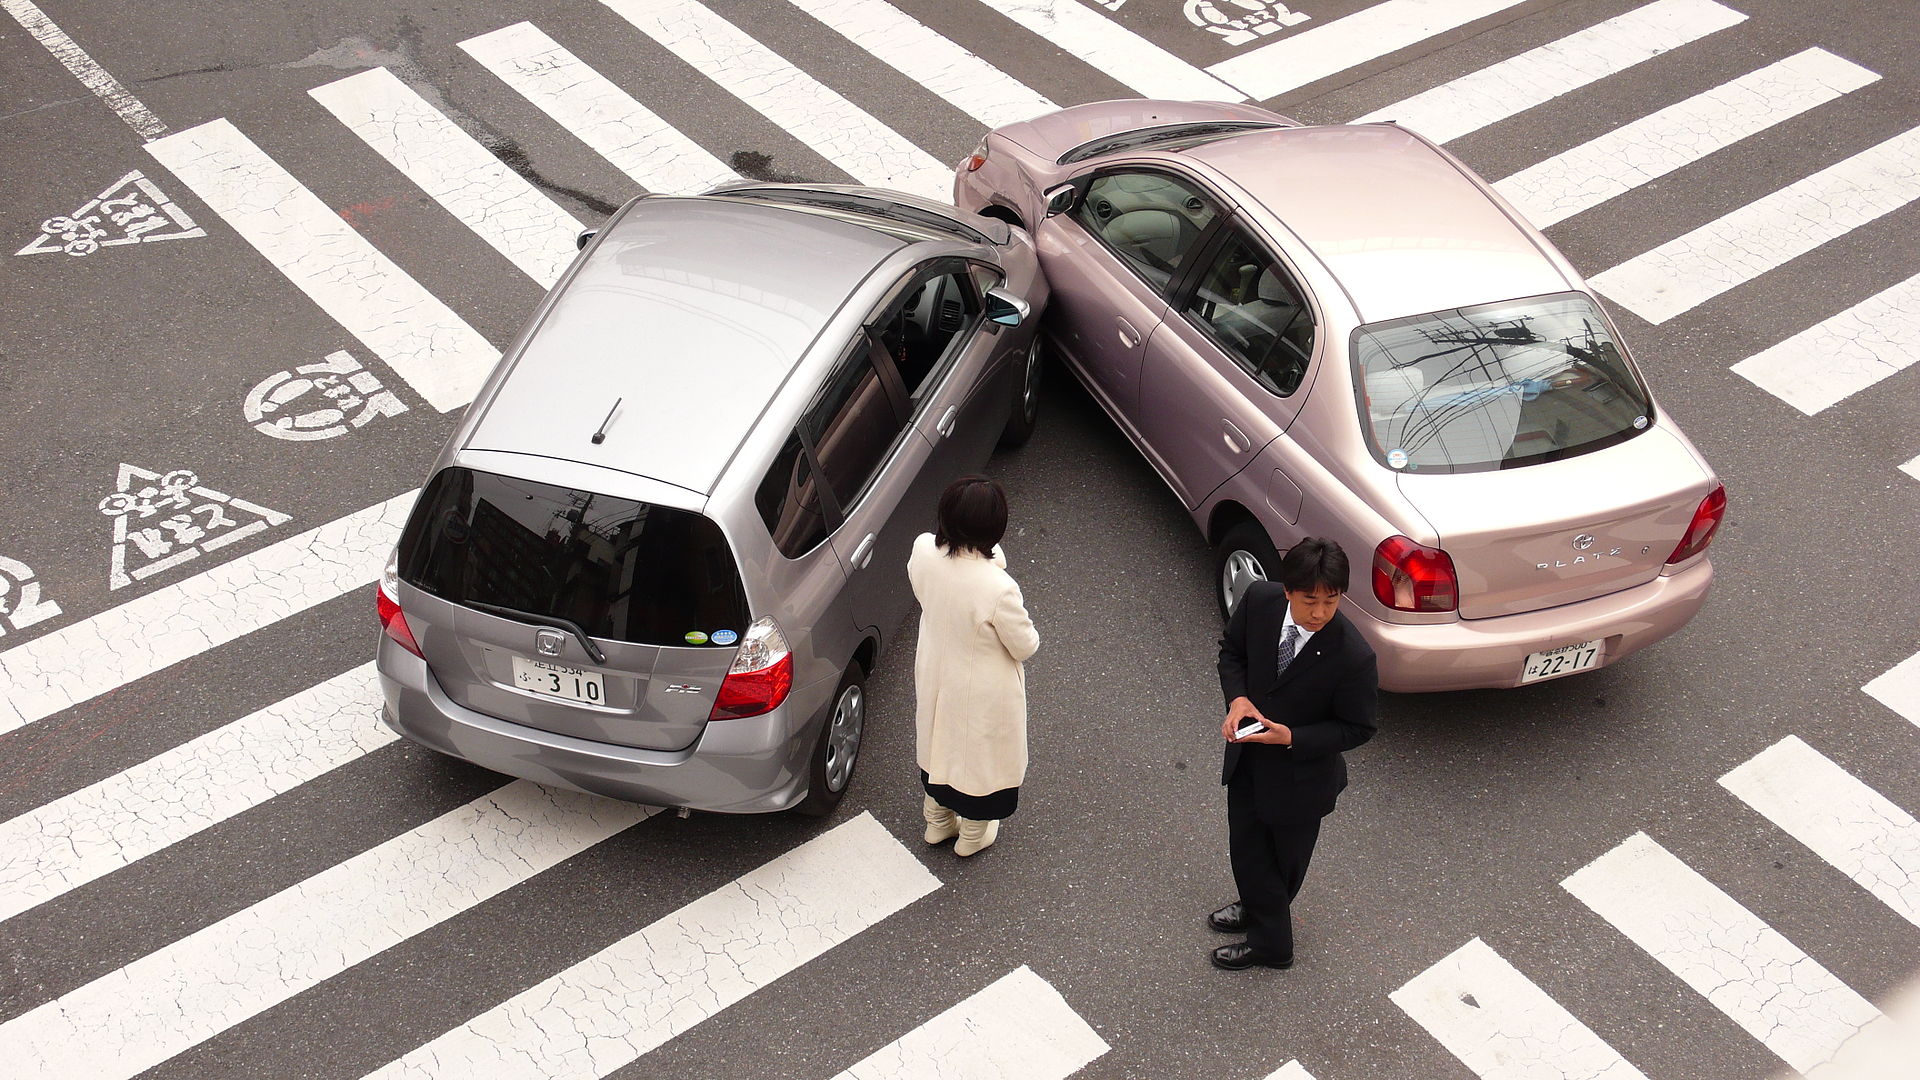 pedestrian injuries and car speed